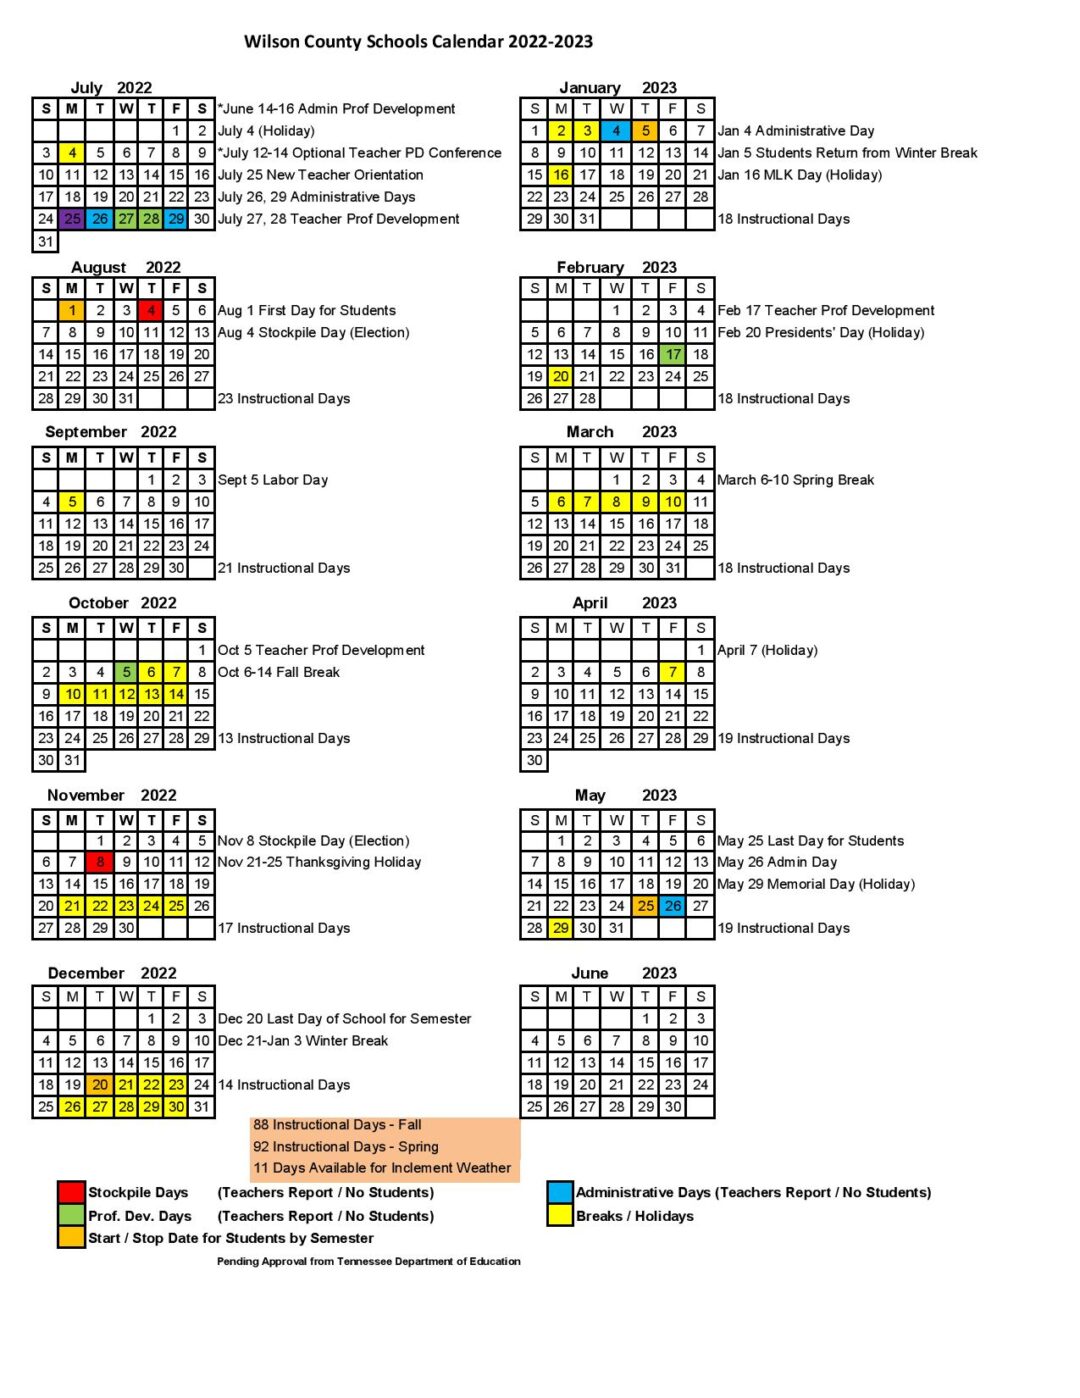 Wilson County Schools Calendar 20222023 in PDF